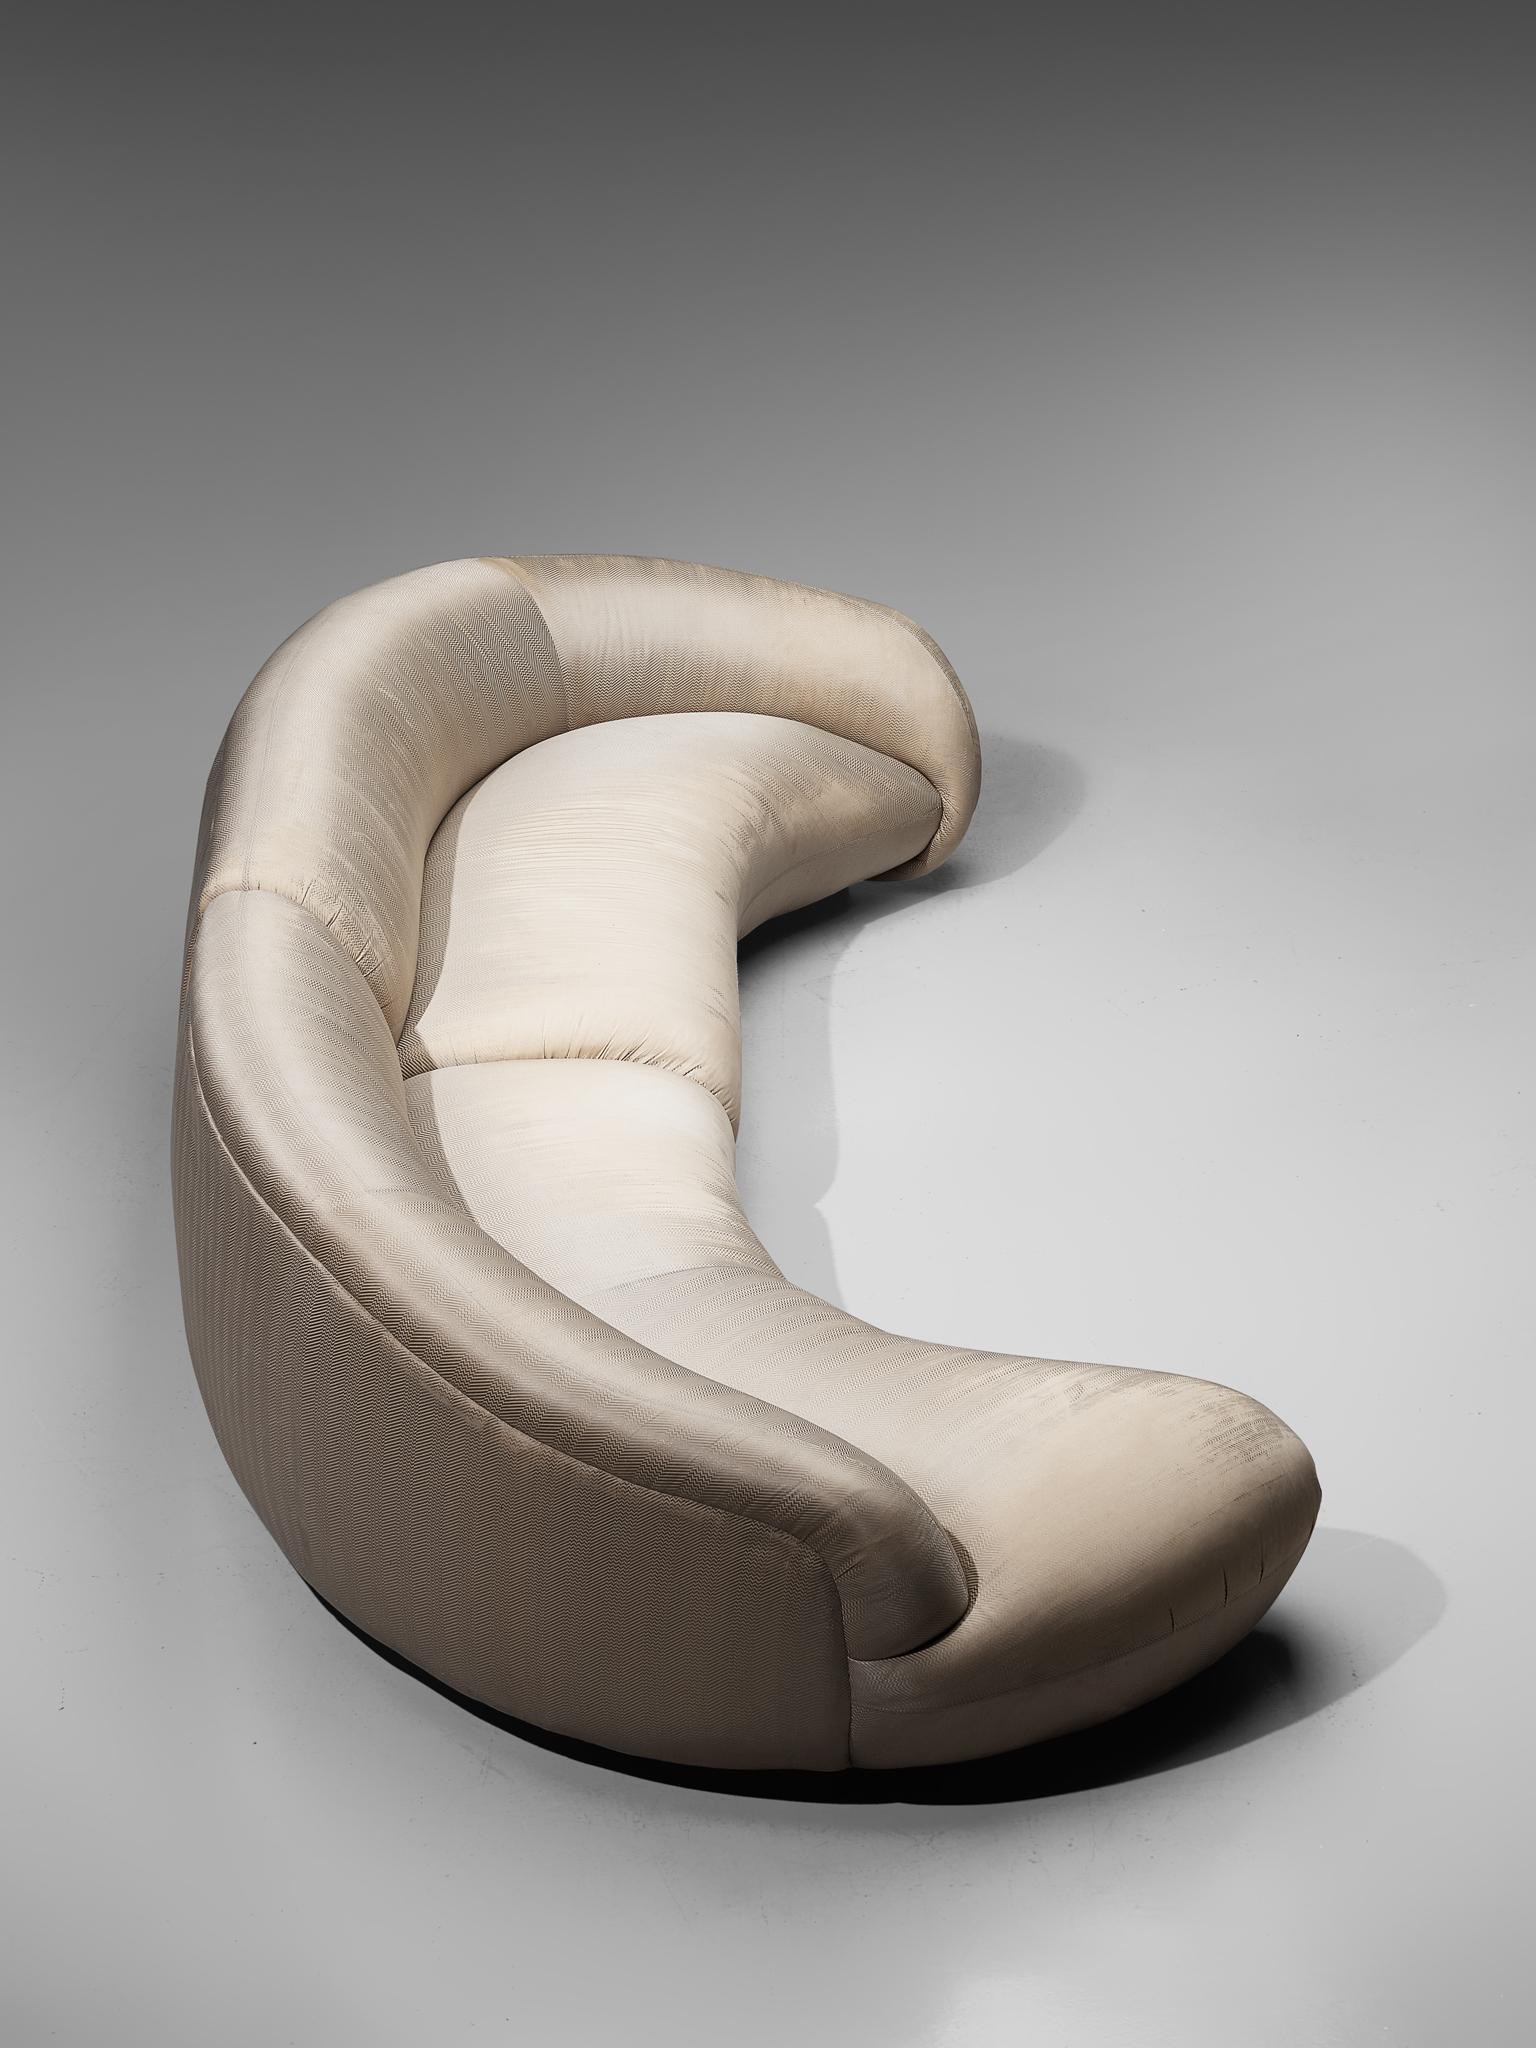 Vladimir Kagan Biomorphic Sofa in Eggshell White Upholstery 2